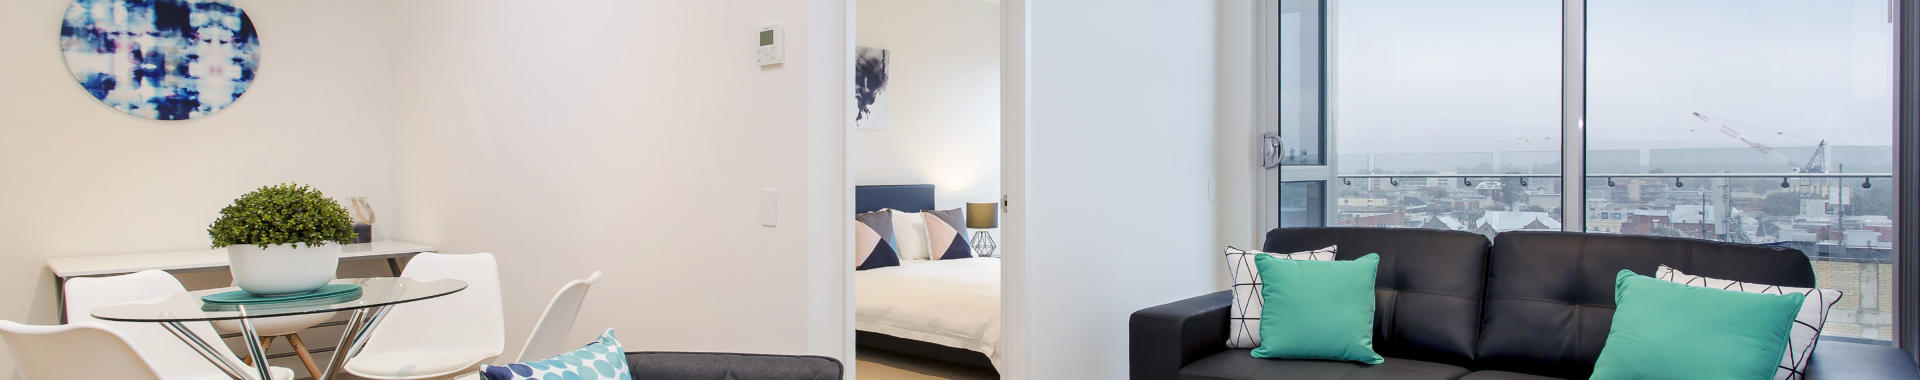 Adelaide Morphett 2 bed corporate apartment lounge